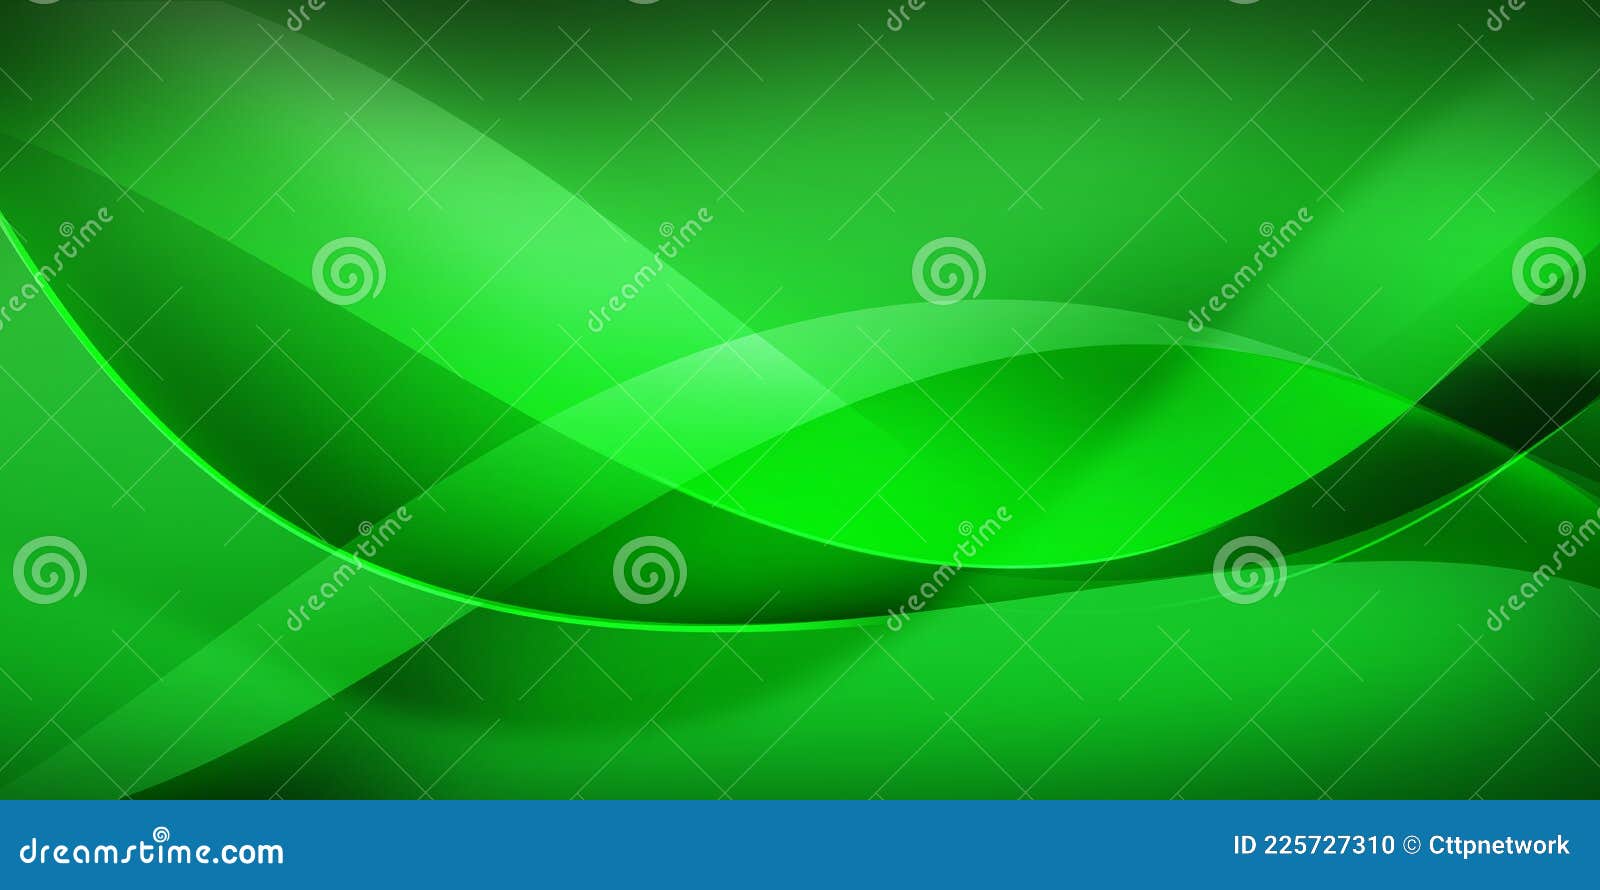 Plain Apple Green Colour Wallpaper For Desktops And  Colorfulness   1545x997 Wallpaper  teahubio